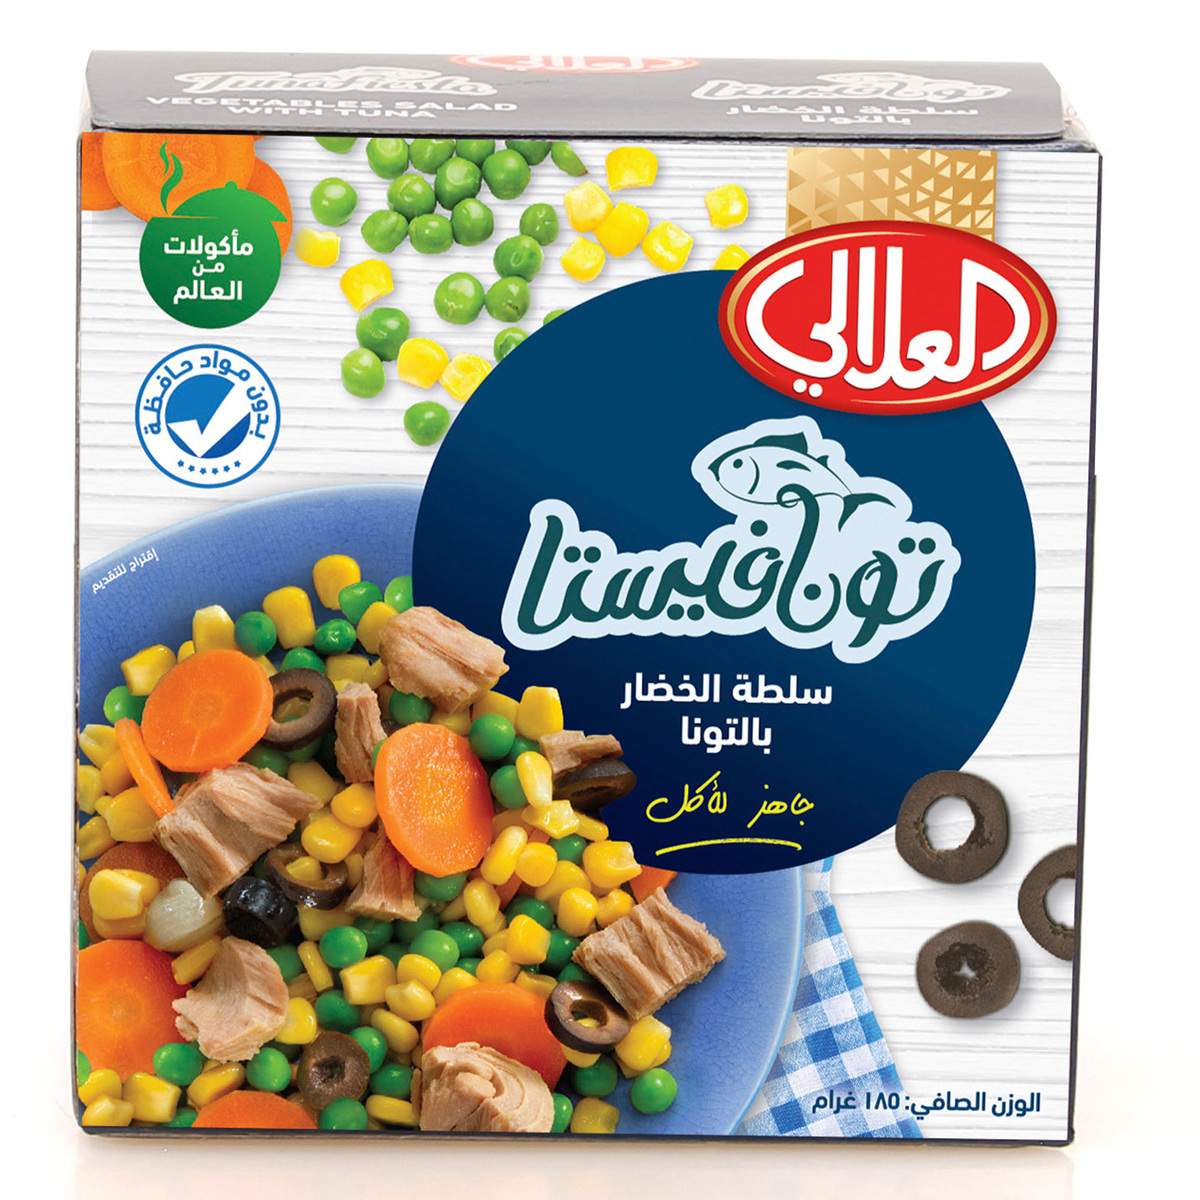 Al Alali Vegetable Salad With tuna 185g